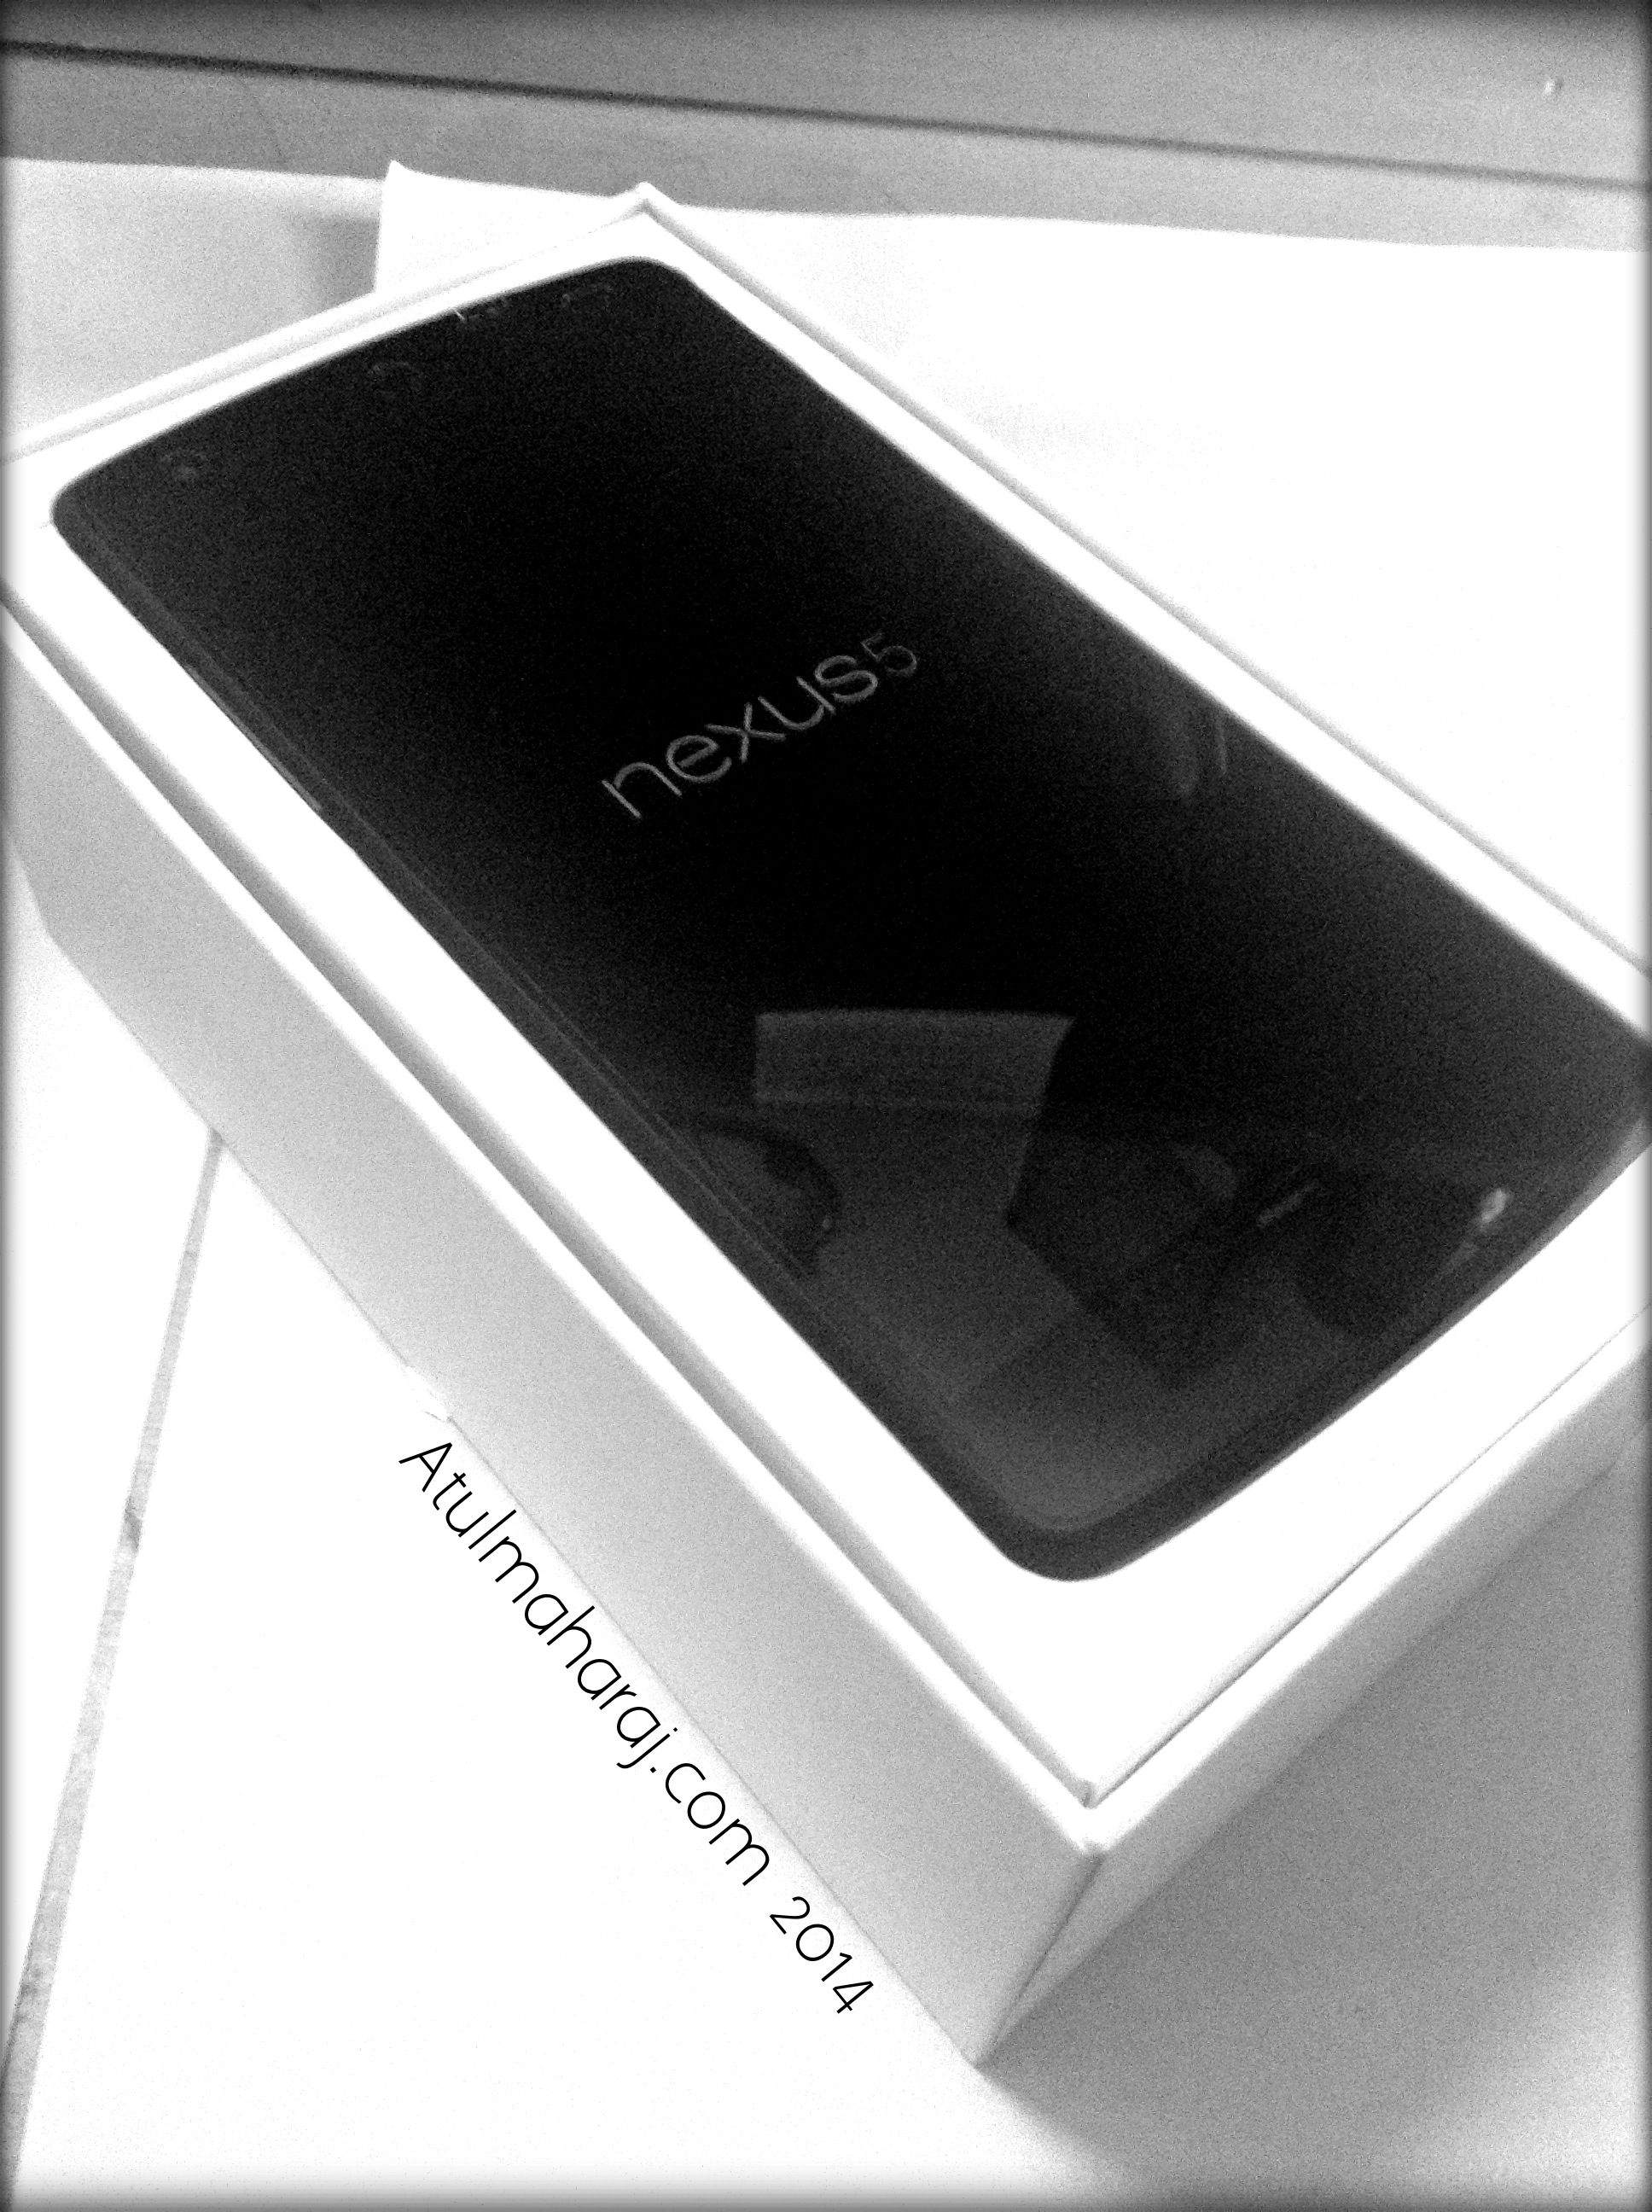 Nexus 5 - 16gb Black Indian Edition